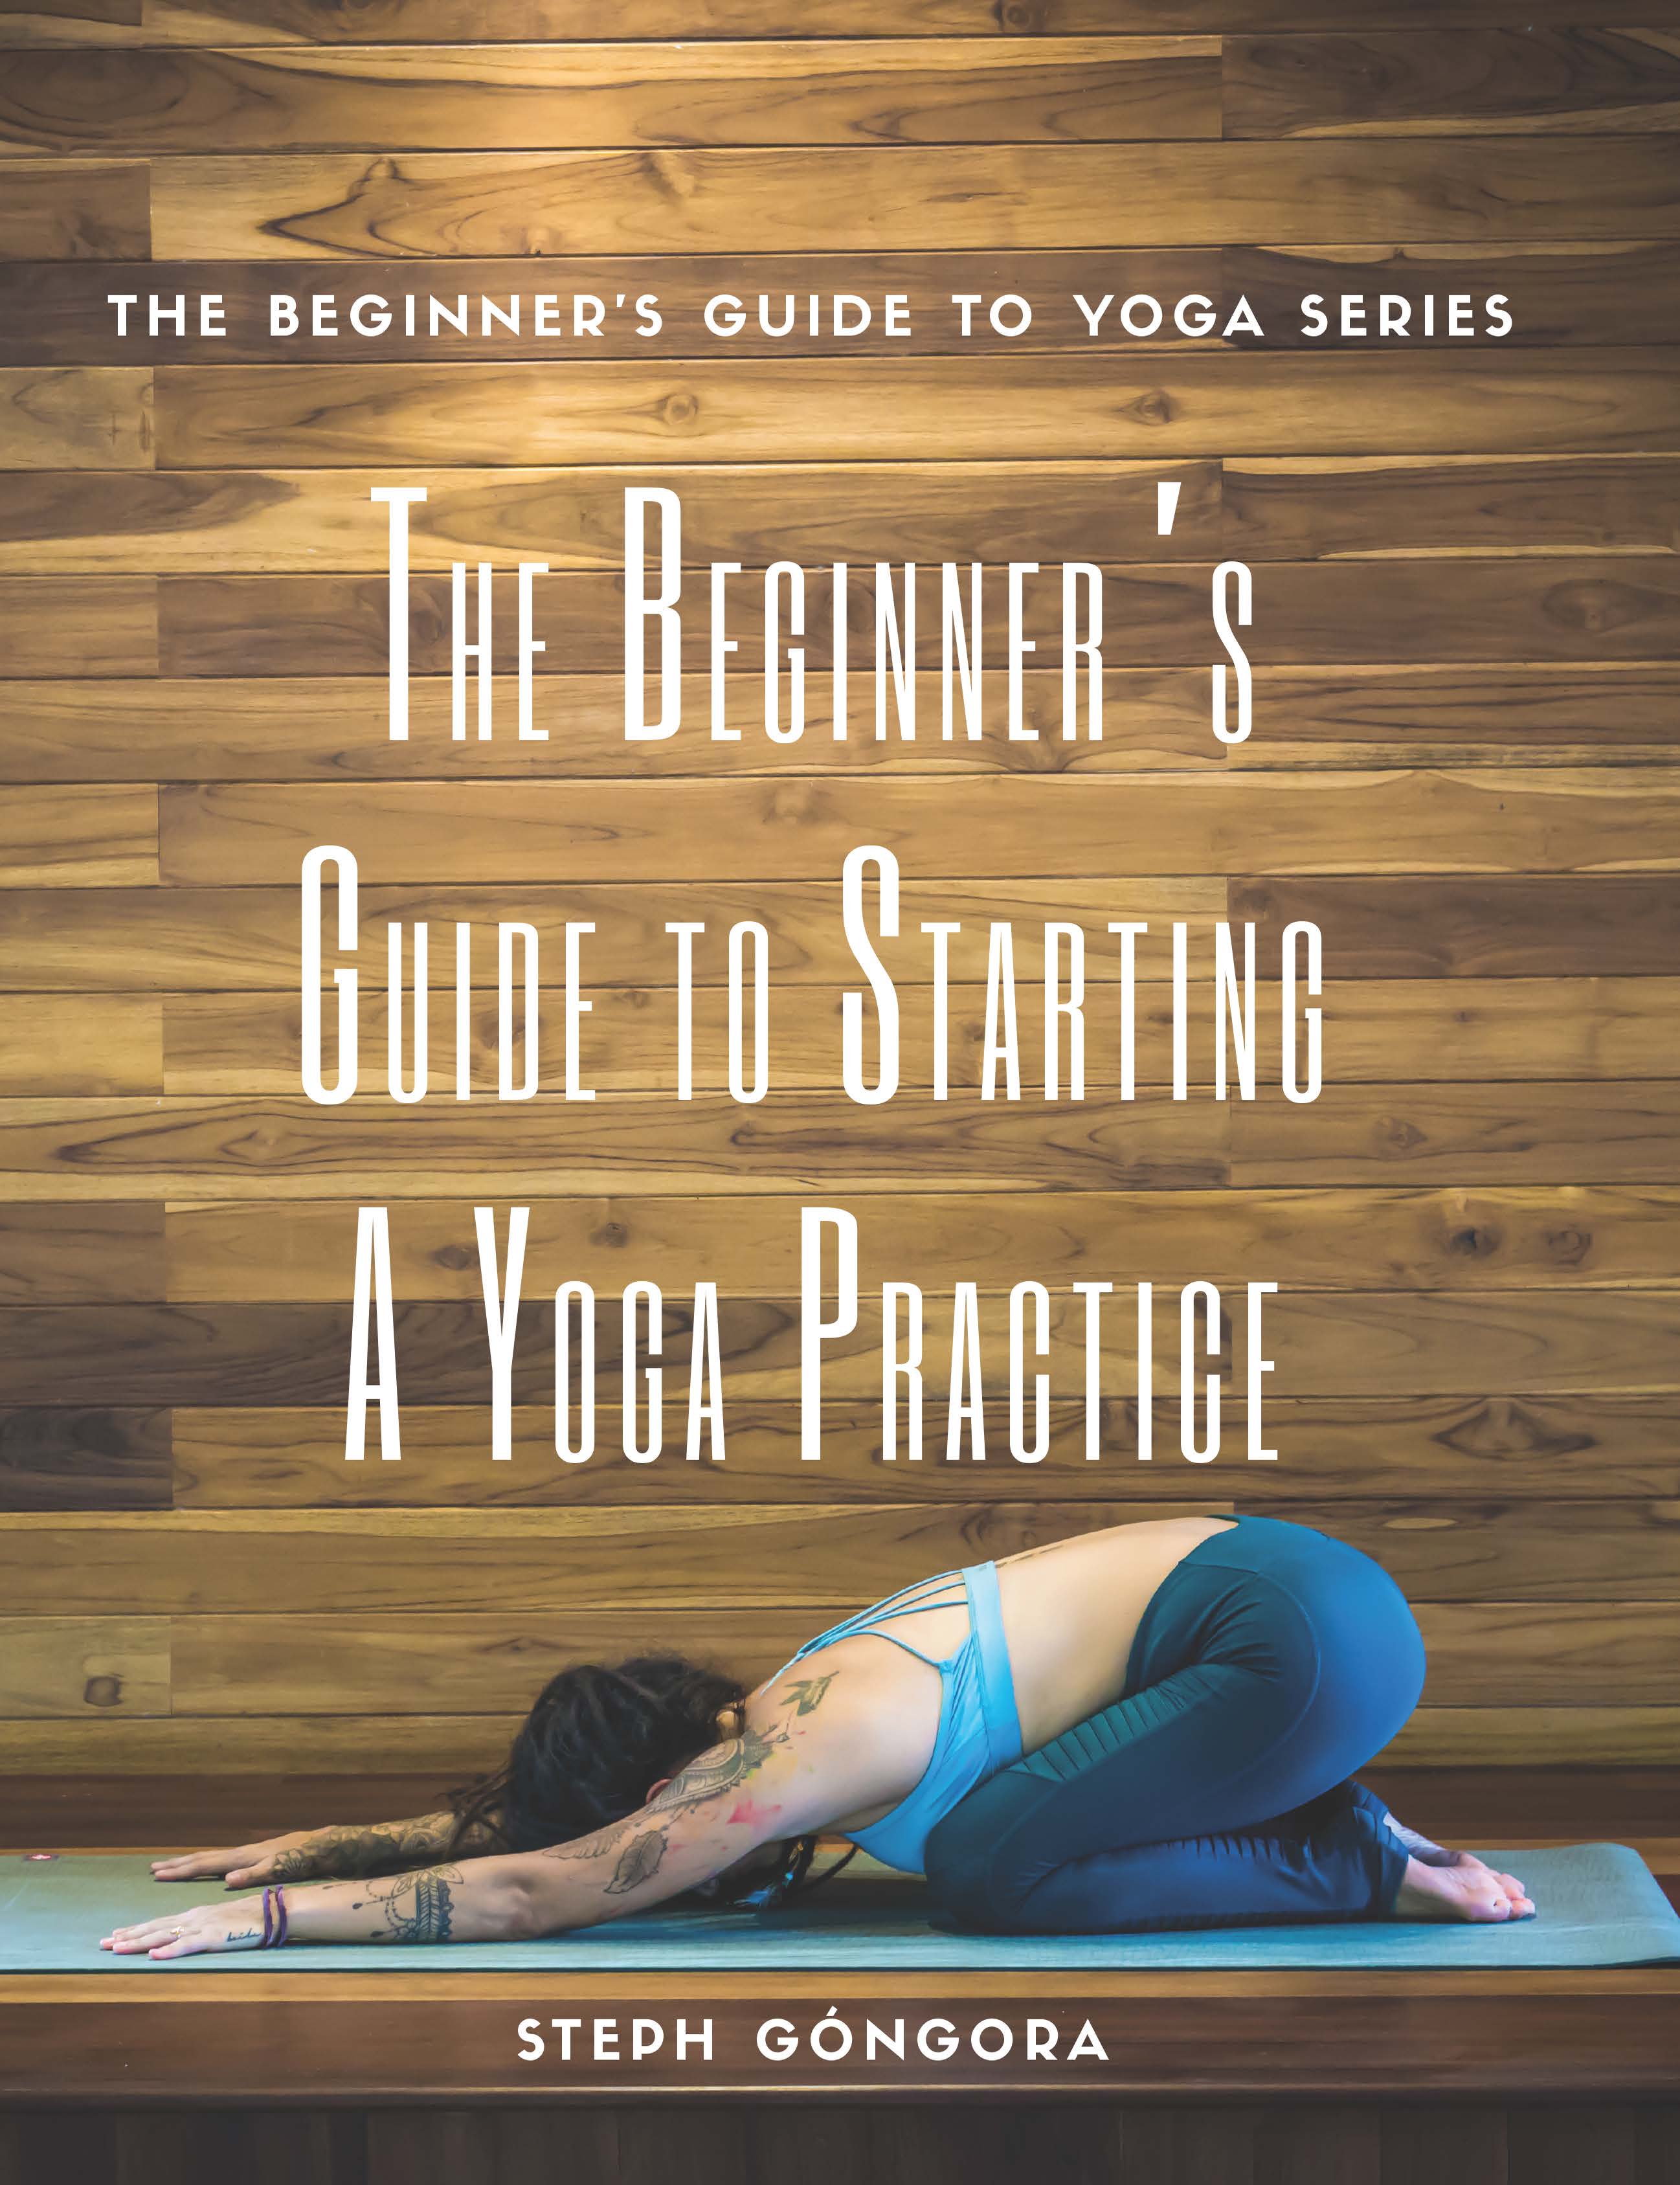 books on yoga and meditation